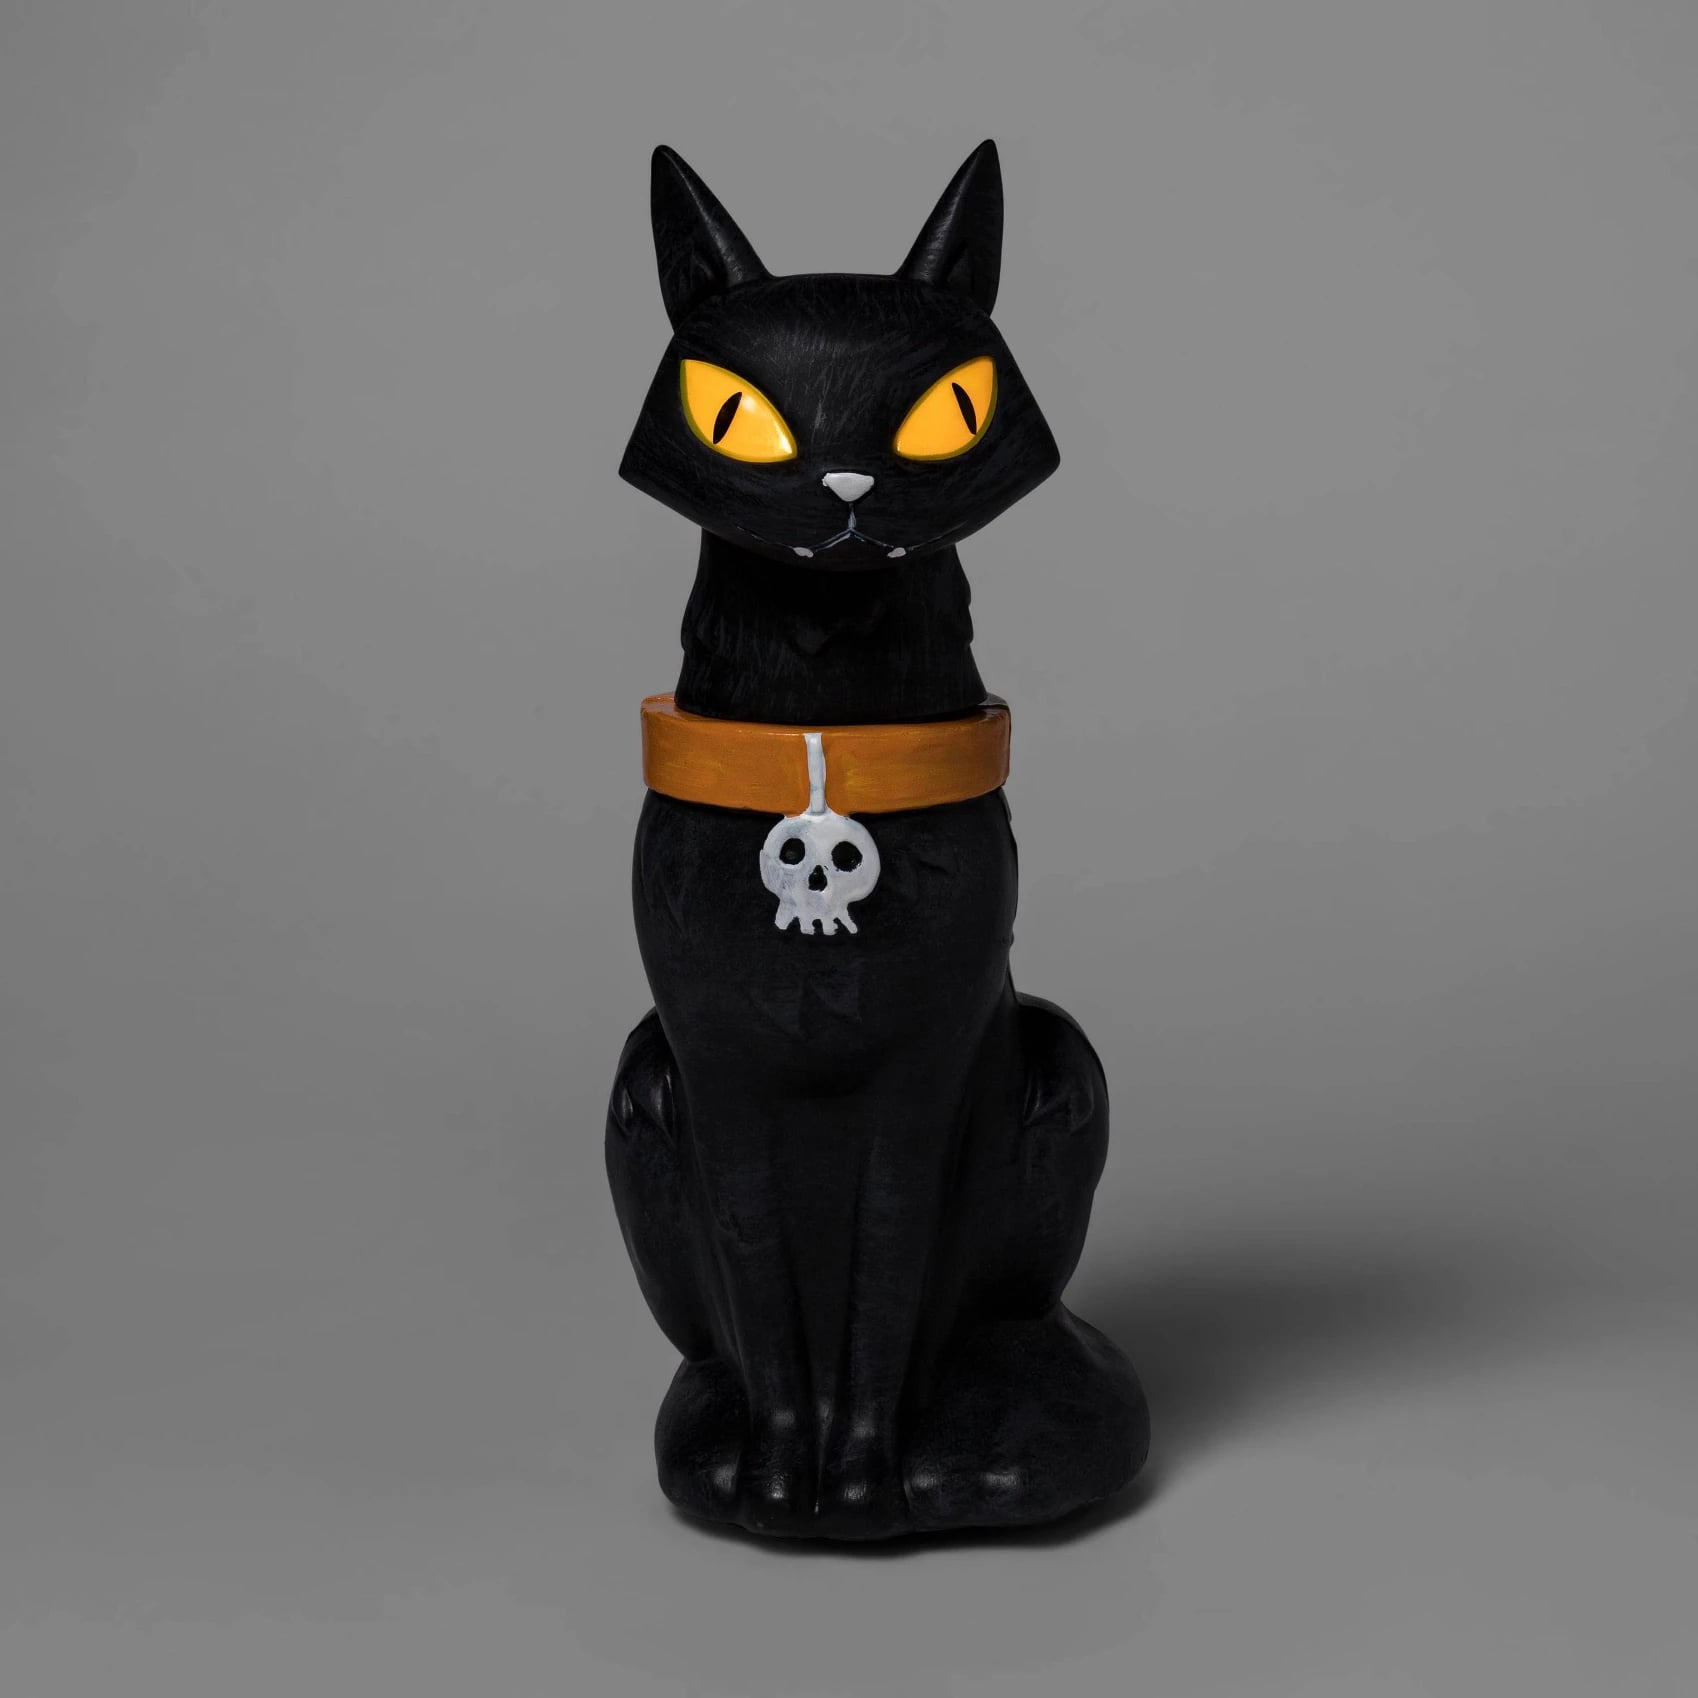 Best Halloween Decor For Cat Lovers | 2020 | POPSUGAR Home